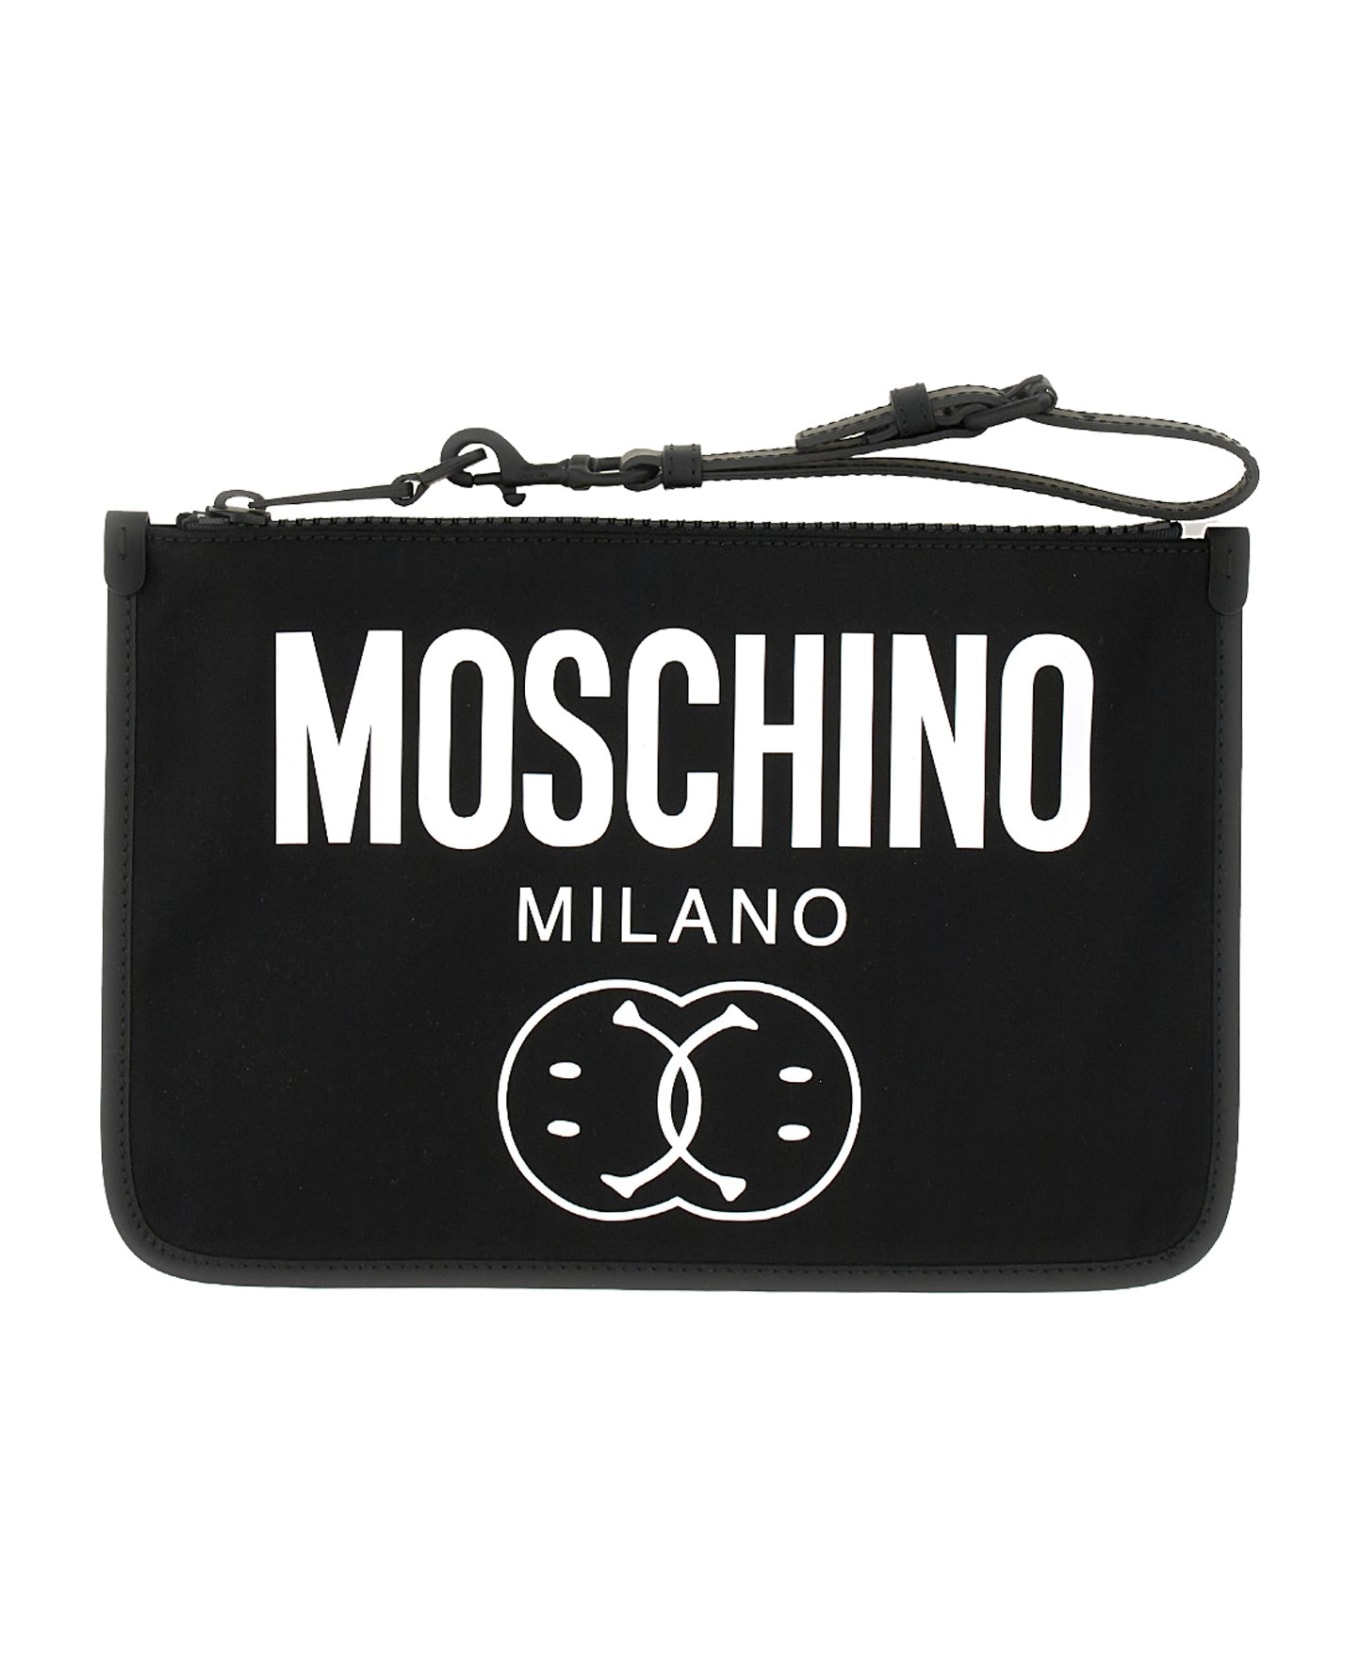 Moschino Clutch With Logo - NERO